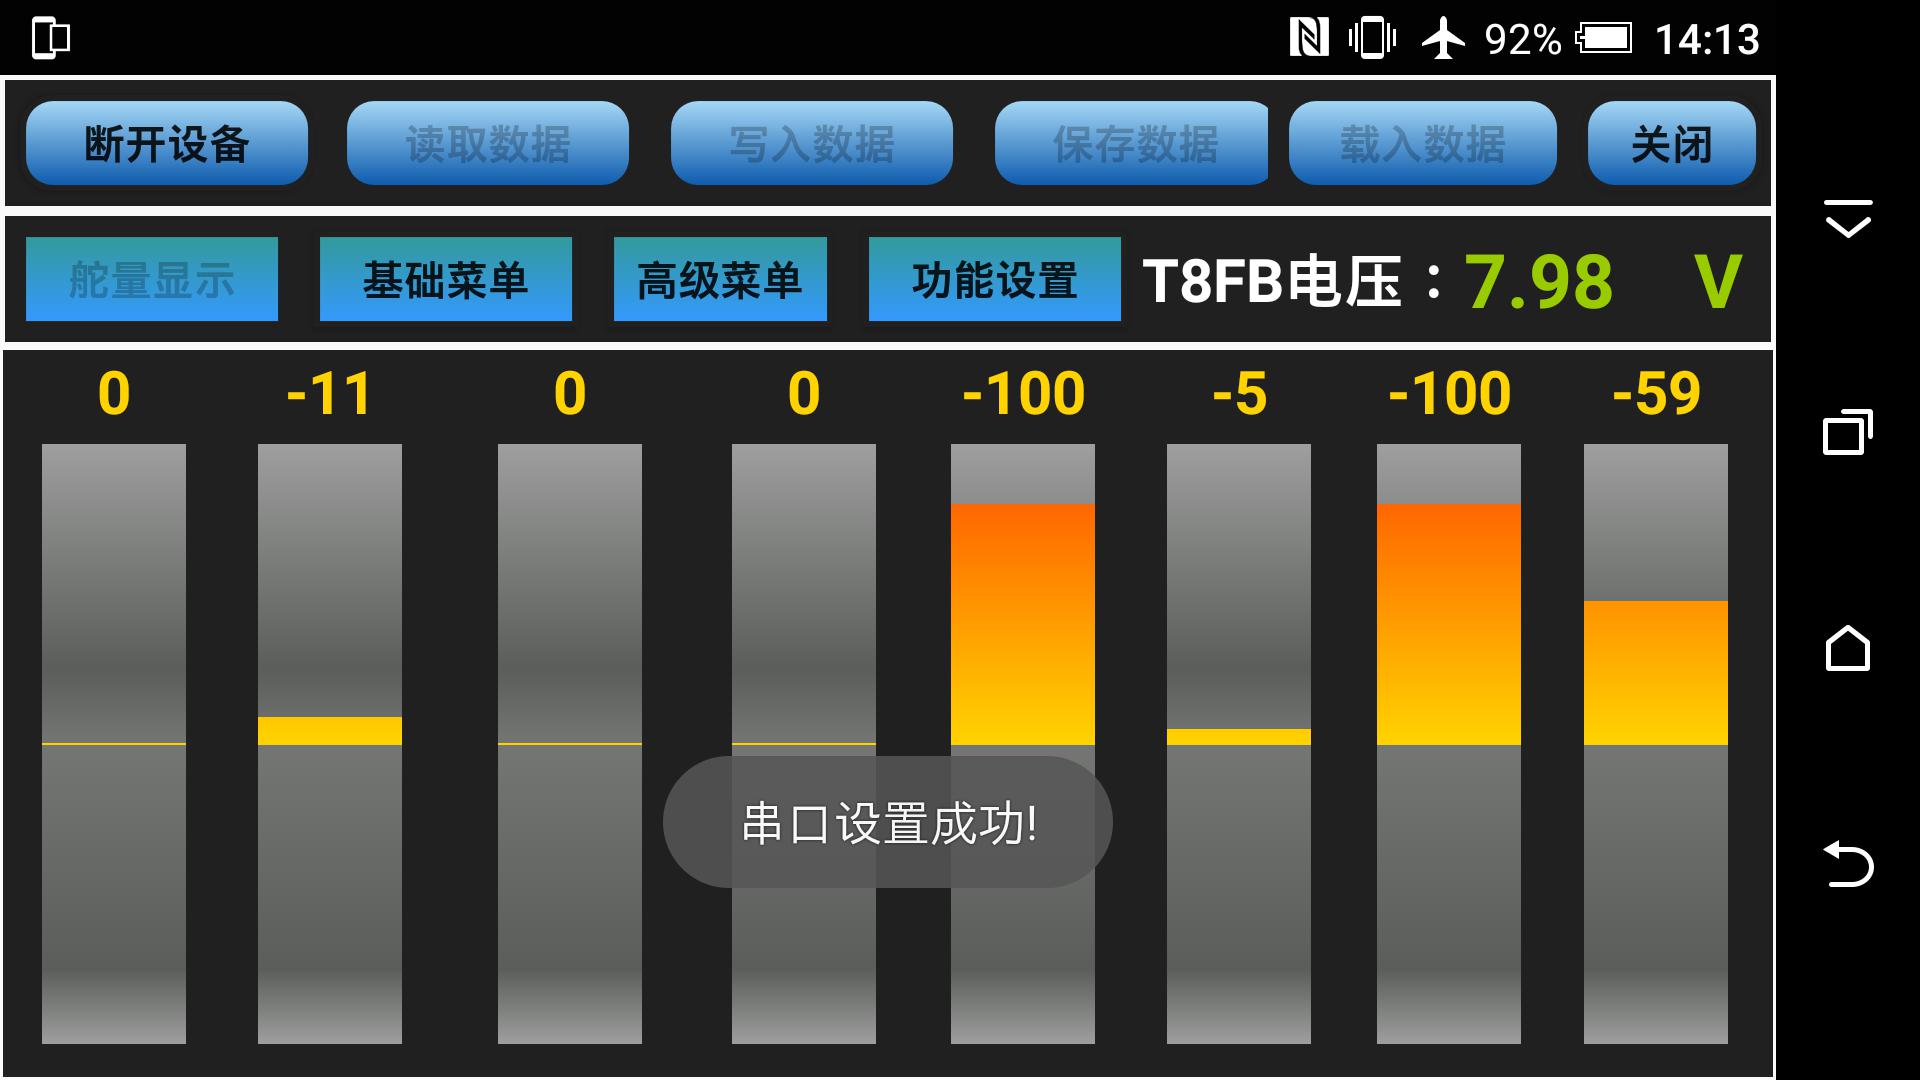 T8FB手机app调试方法步骤 电池,遥控器,固件 作者:乐迪support 1156 